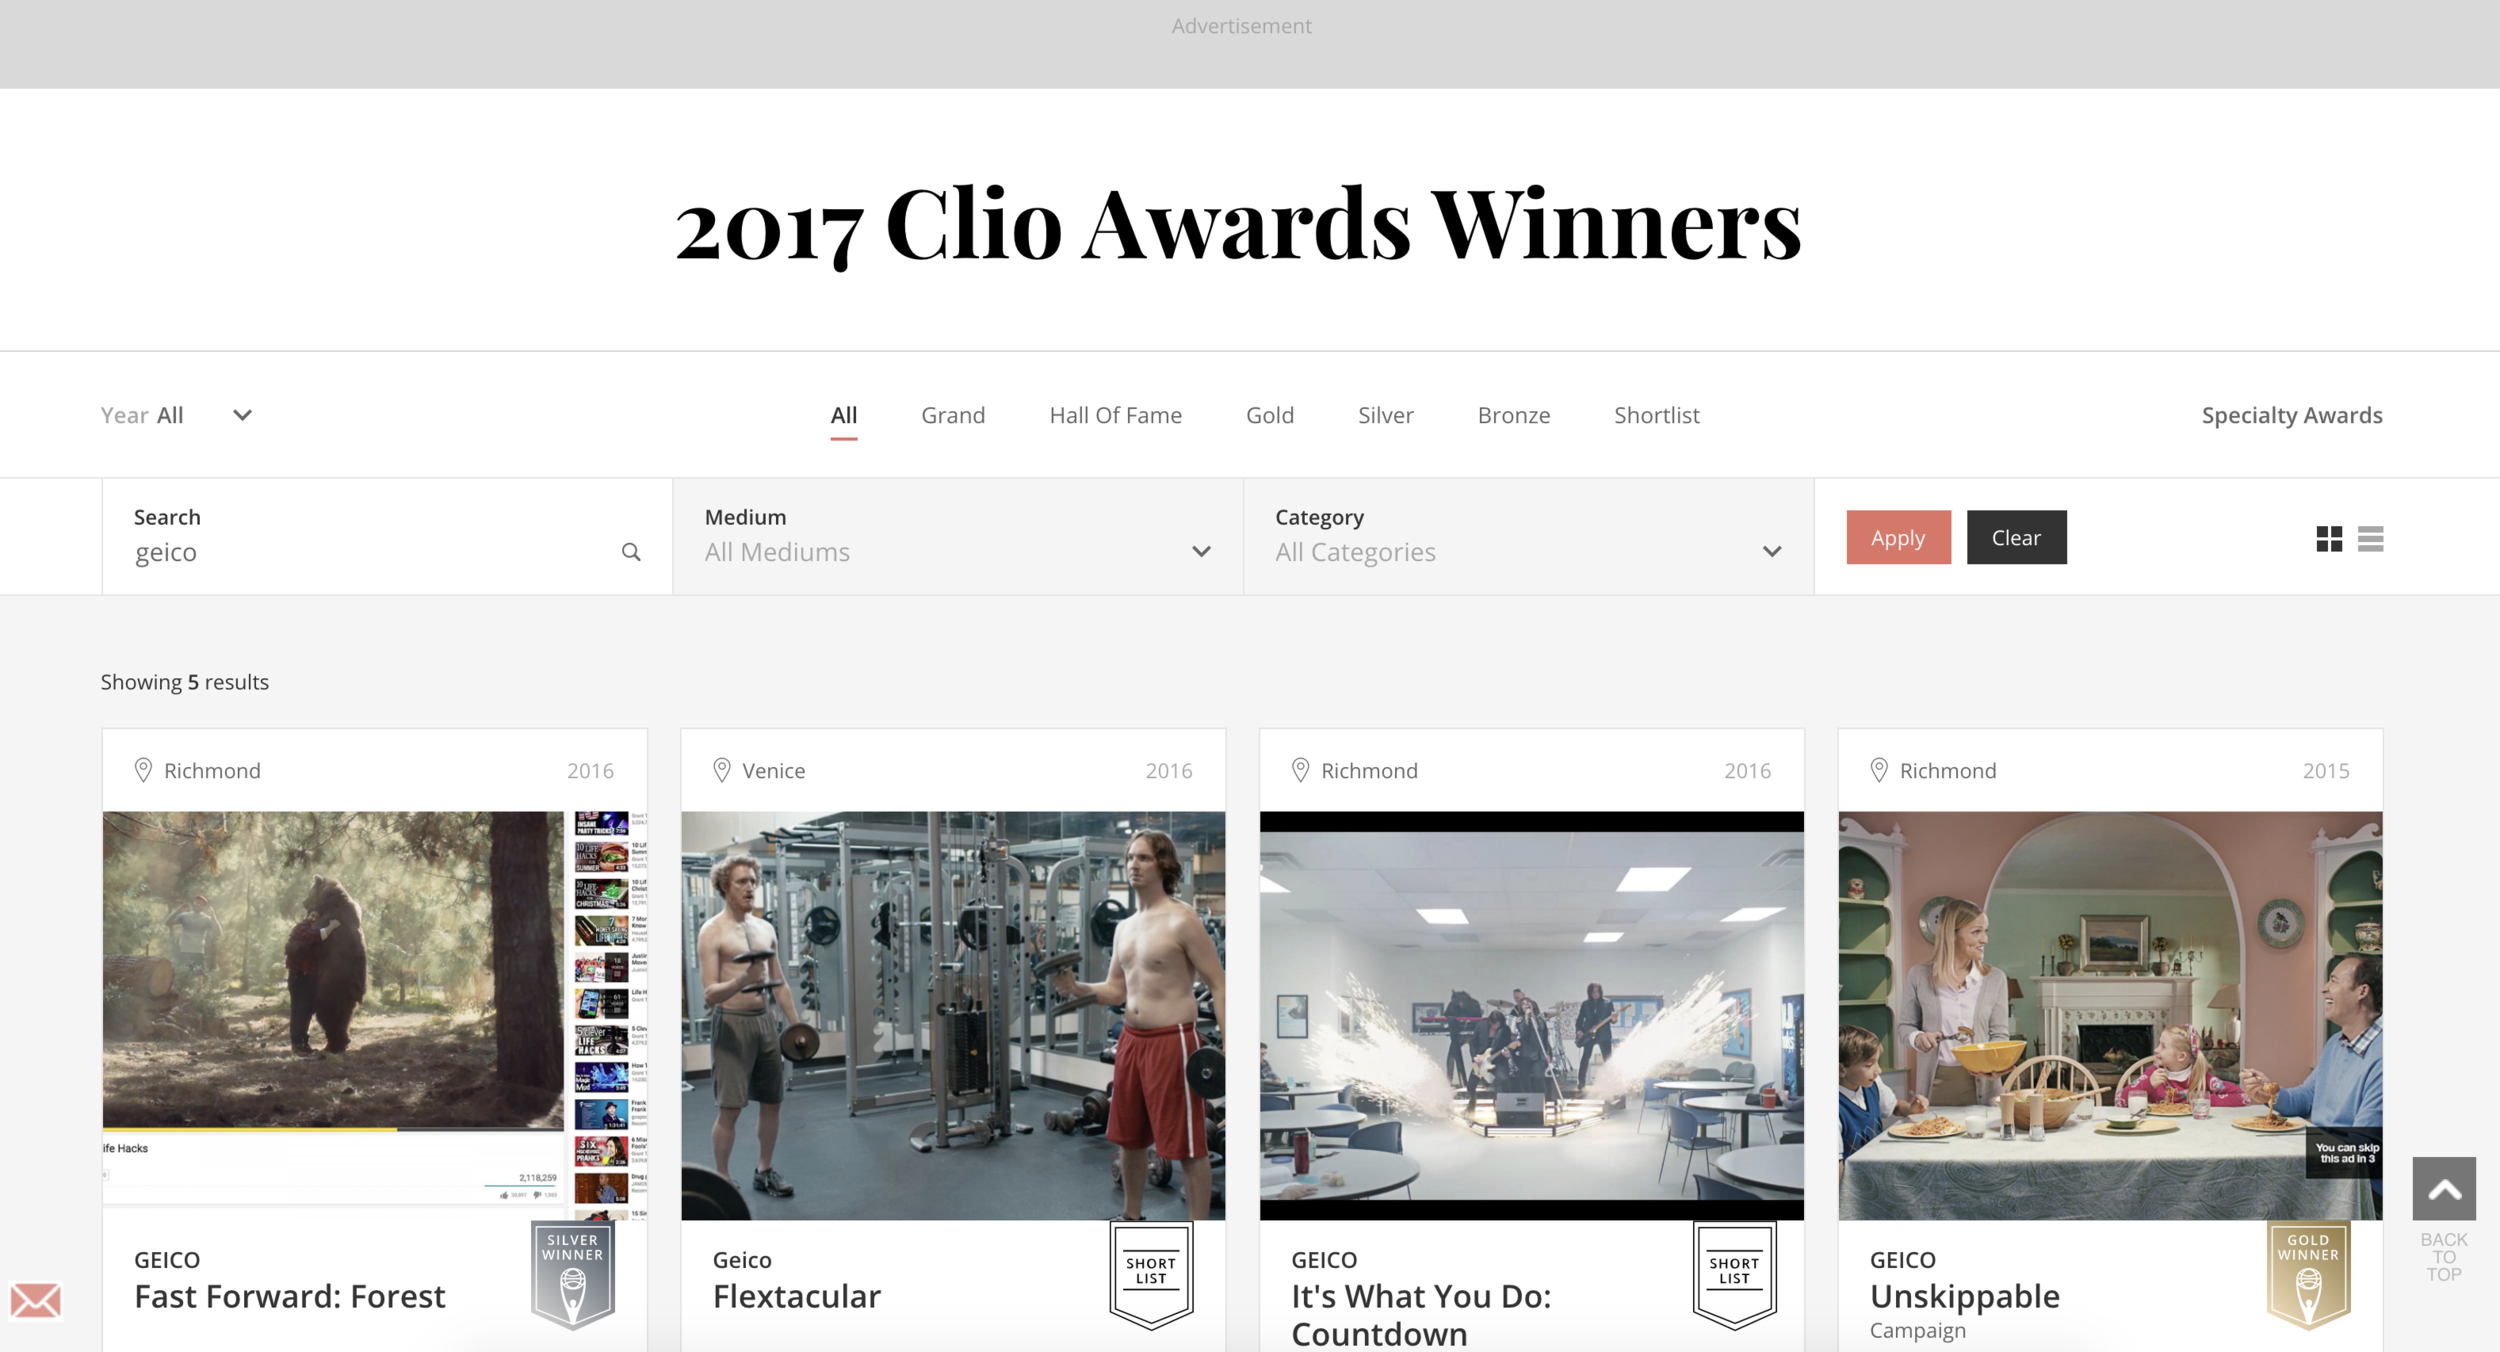 GEICO's Fast Forward wins Clio's Silver